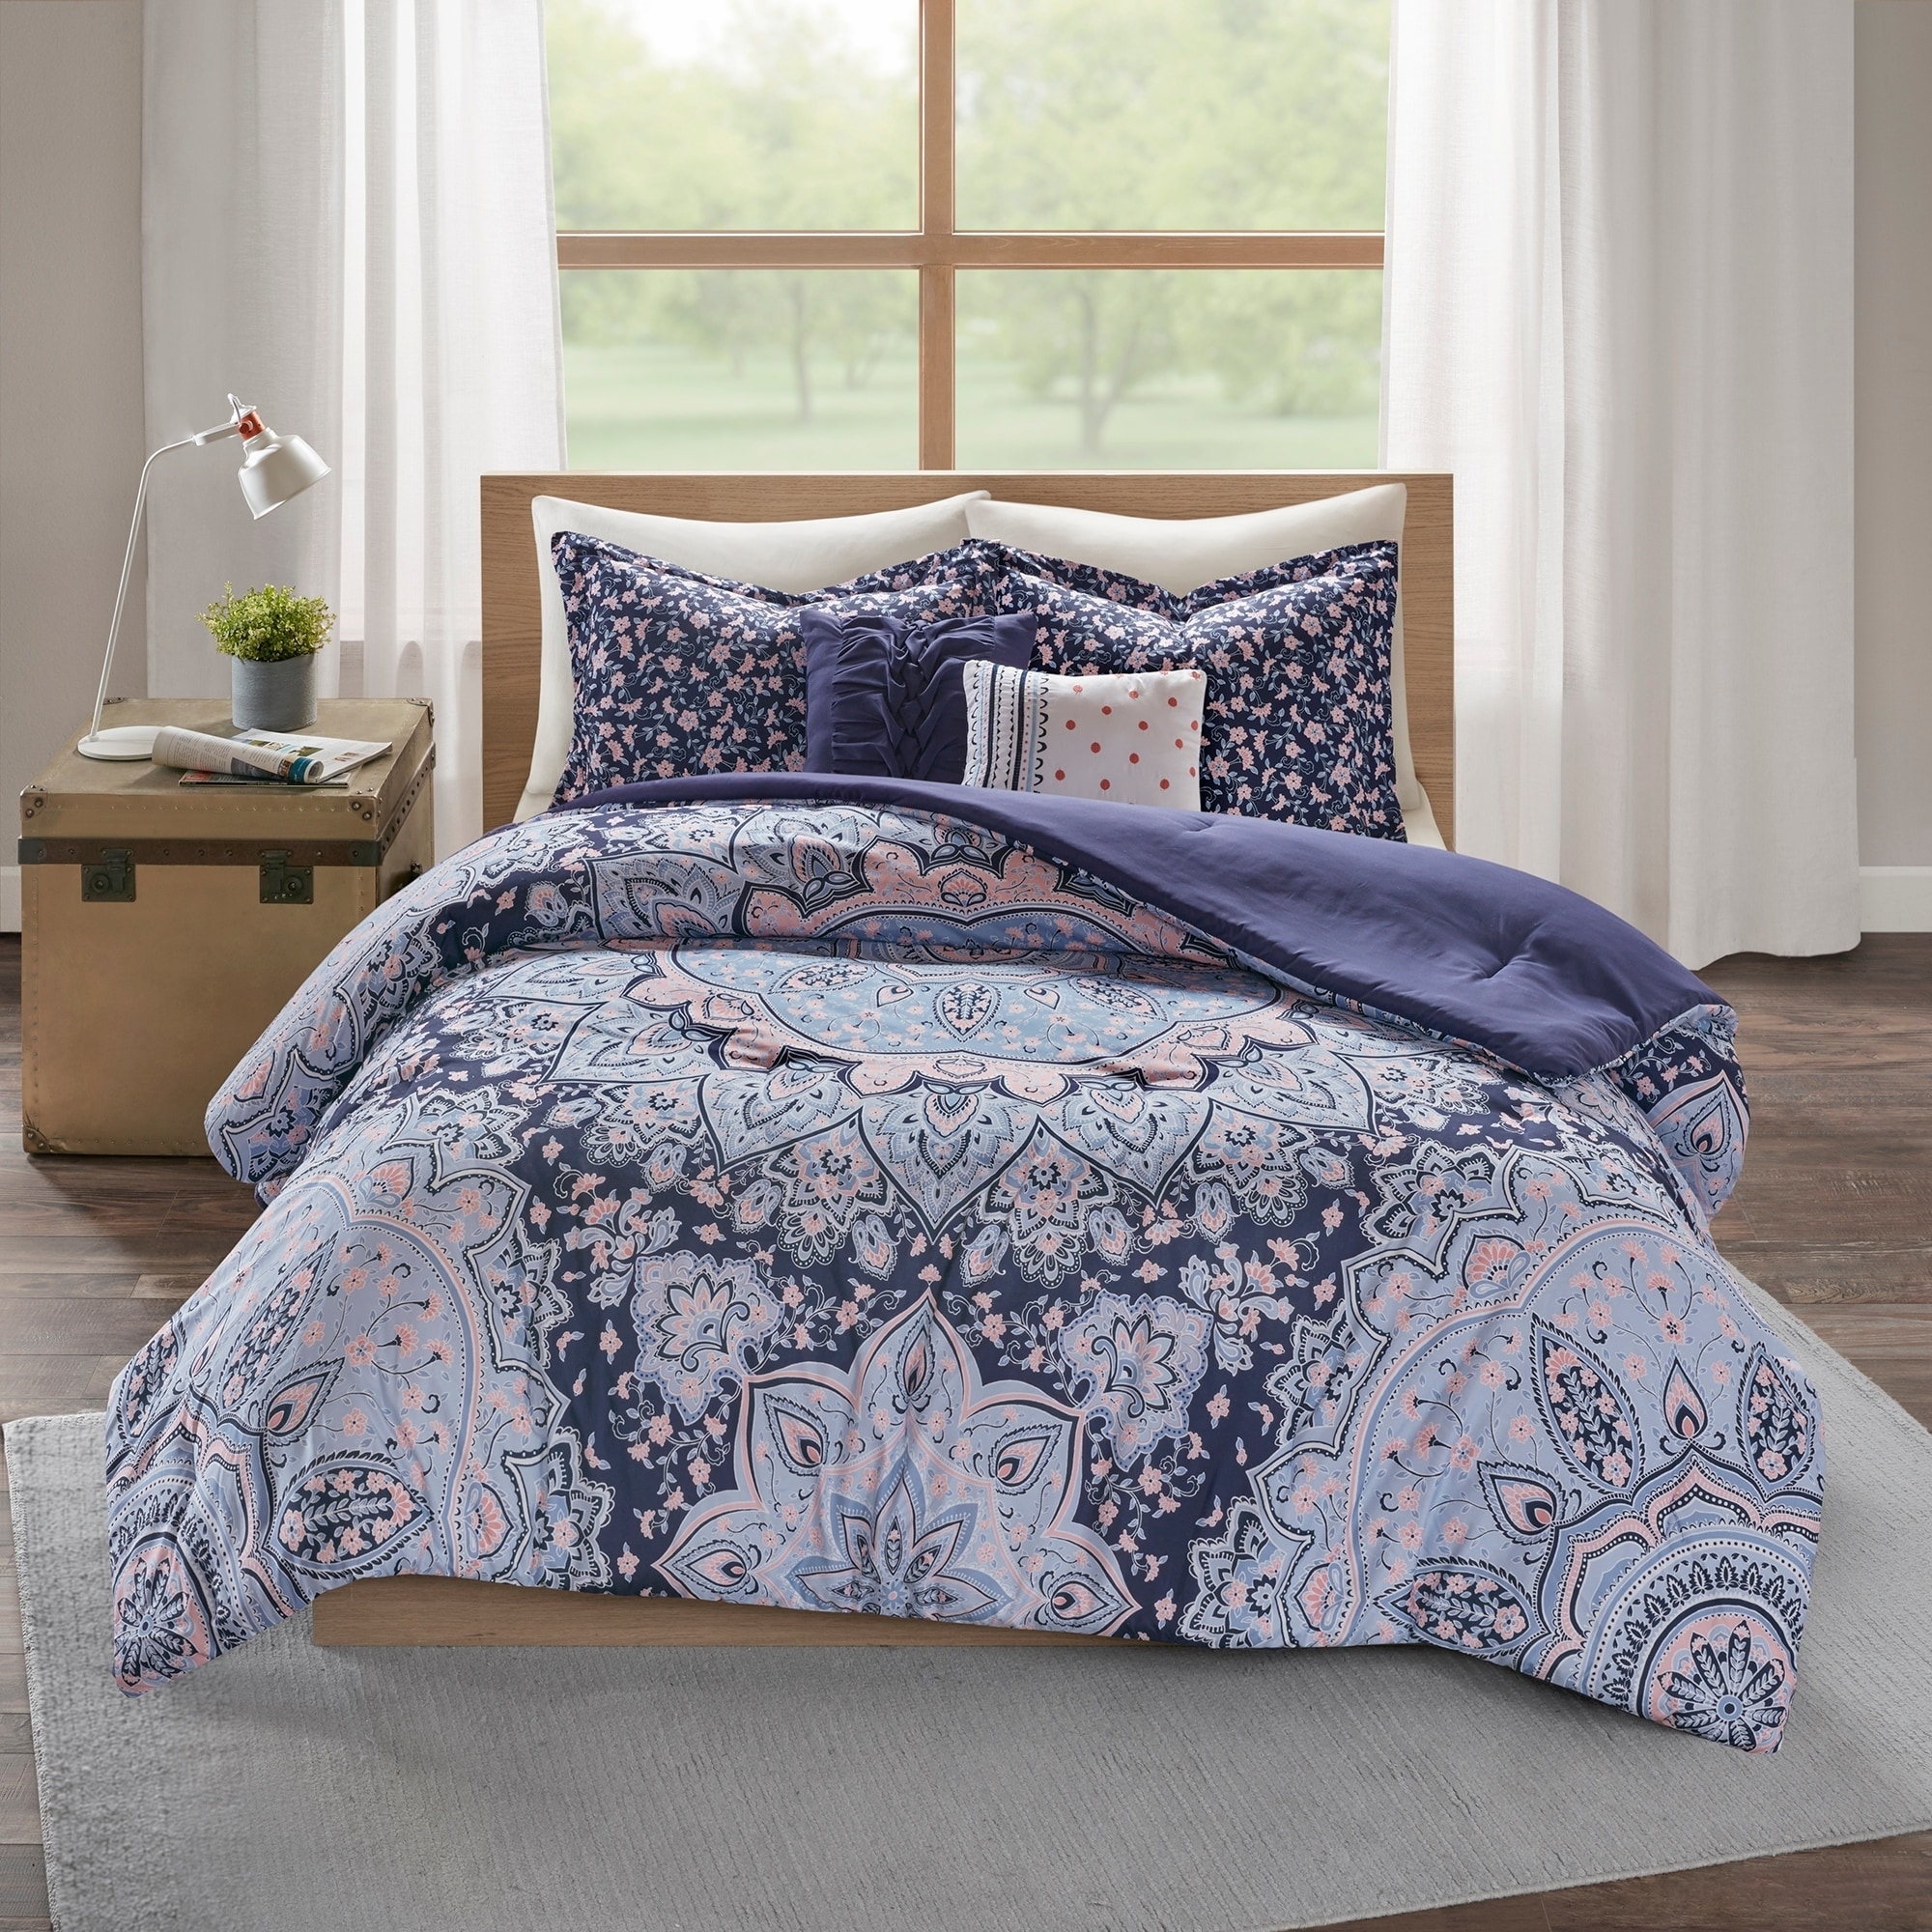 twin xl comforter sets blue